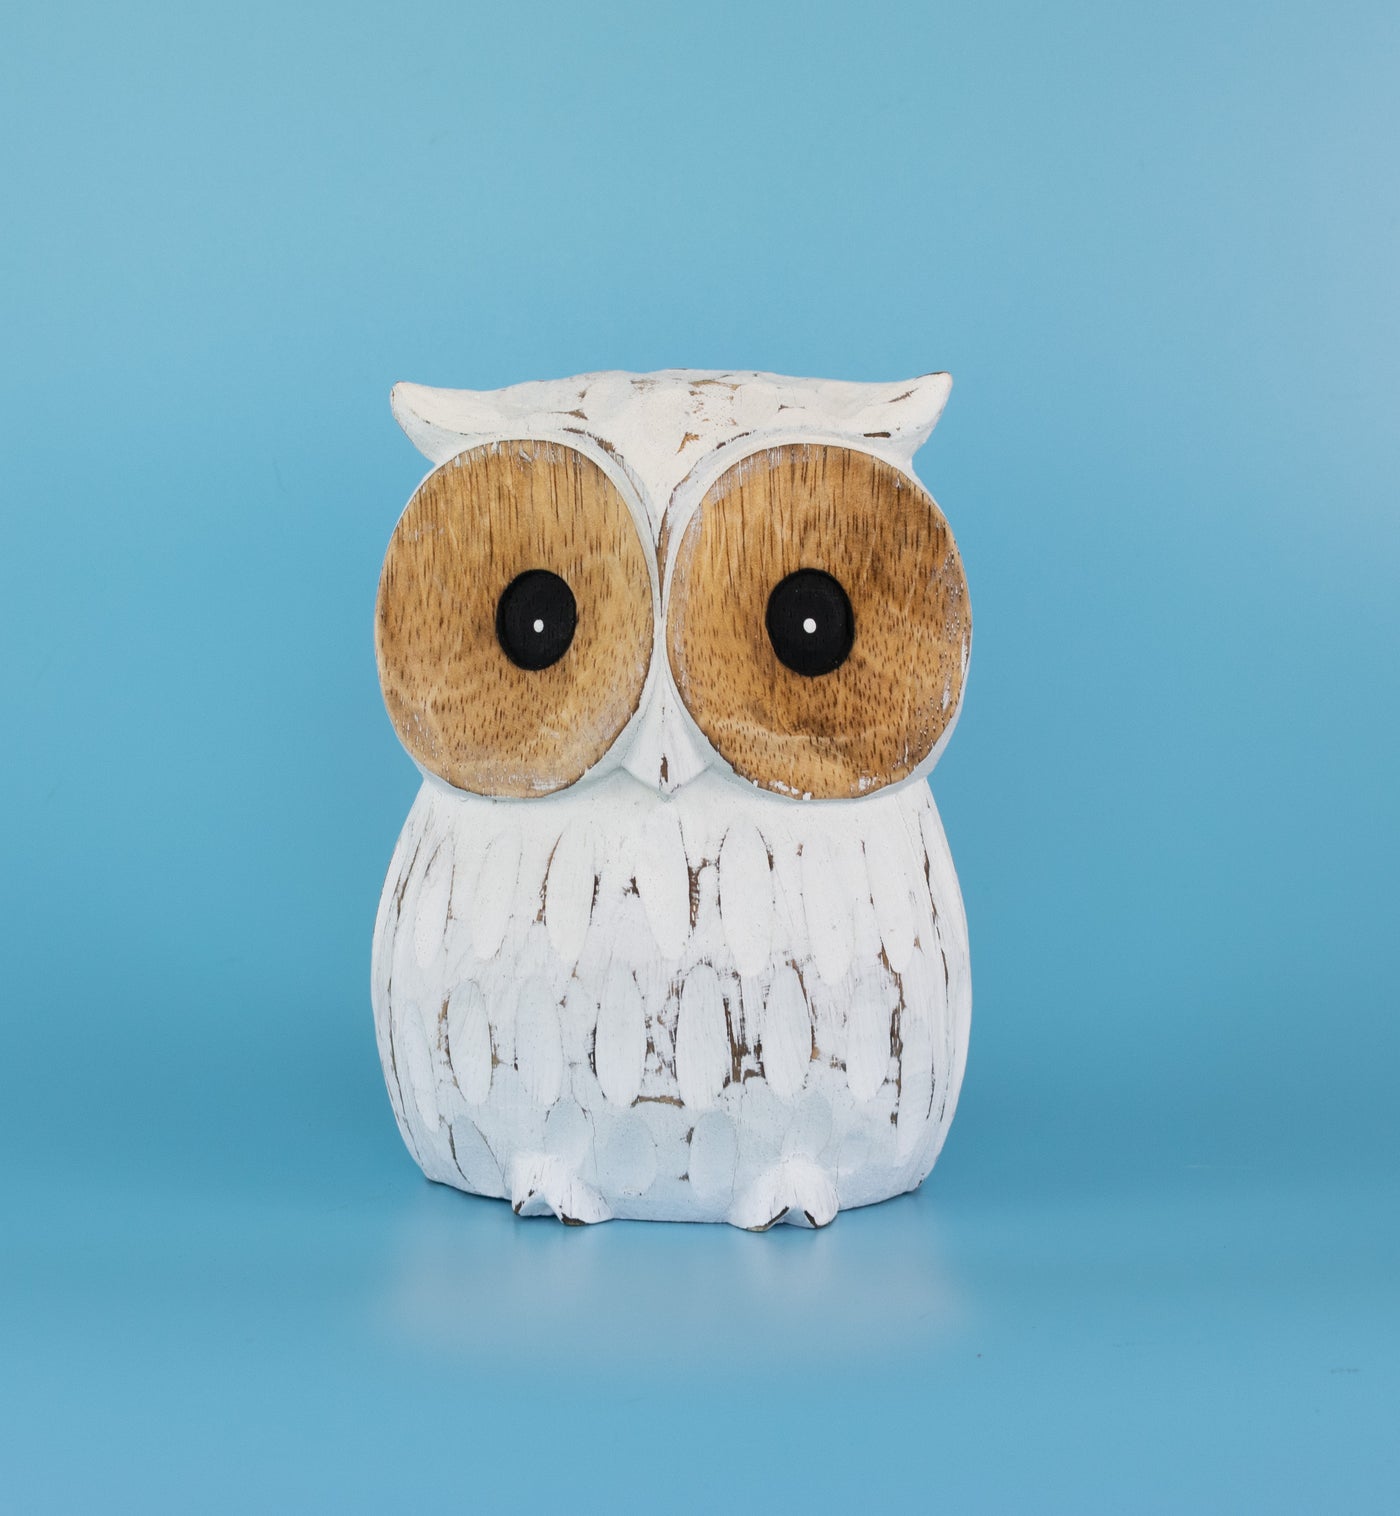 Handmade White-Washed Wooden Owl Statue Figurine Hoot Sculpture